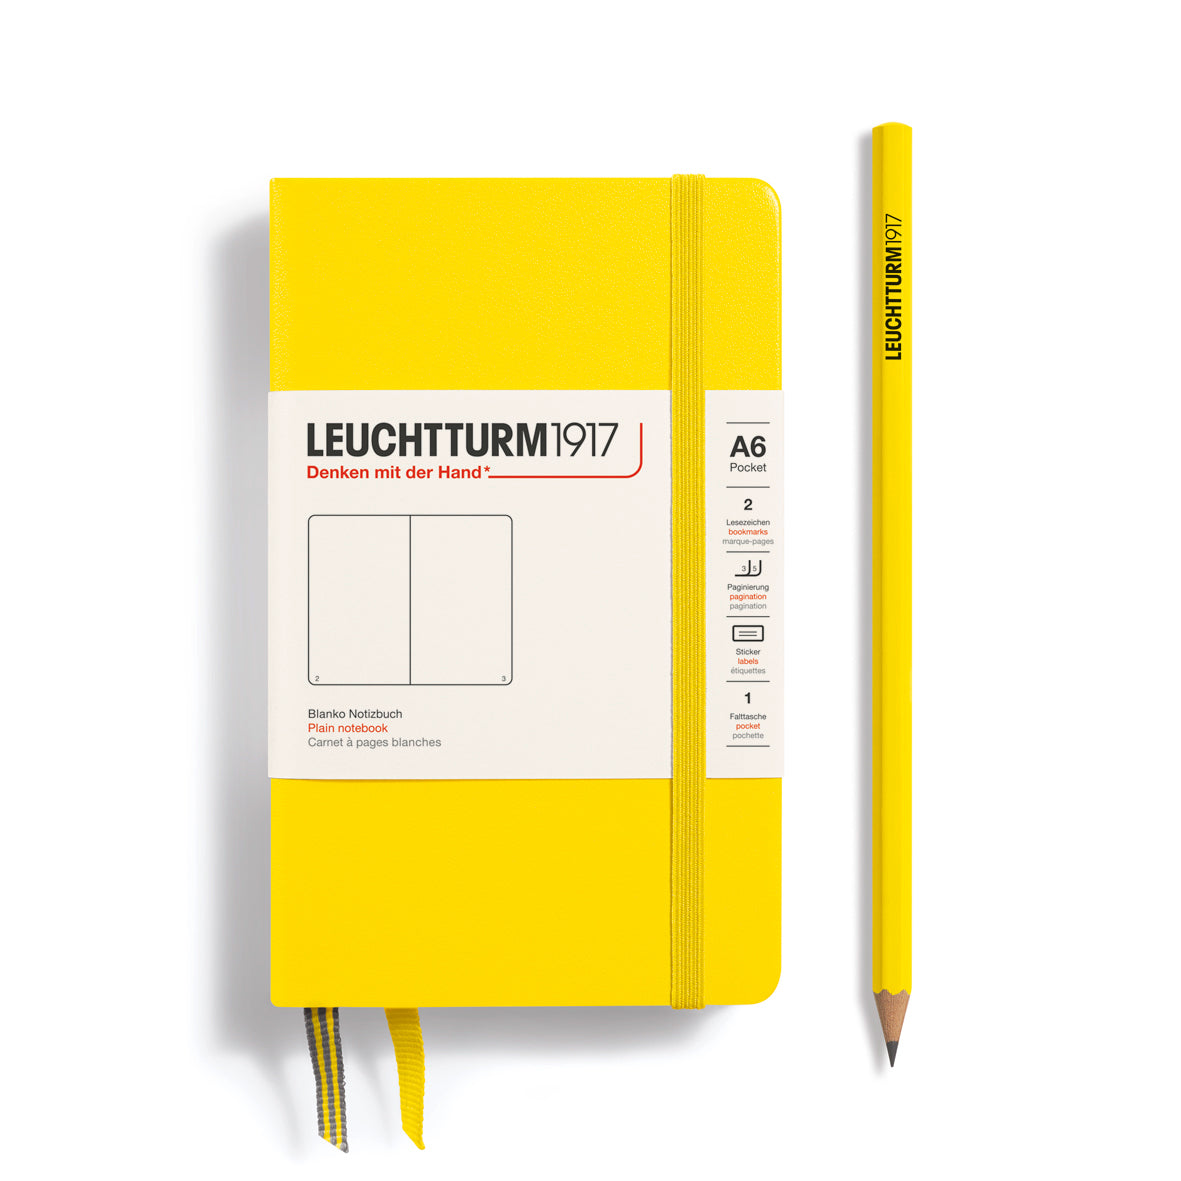 Leuchtturm Pocket Notebook: Hardcover, Plain Pages